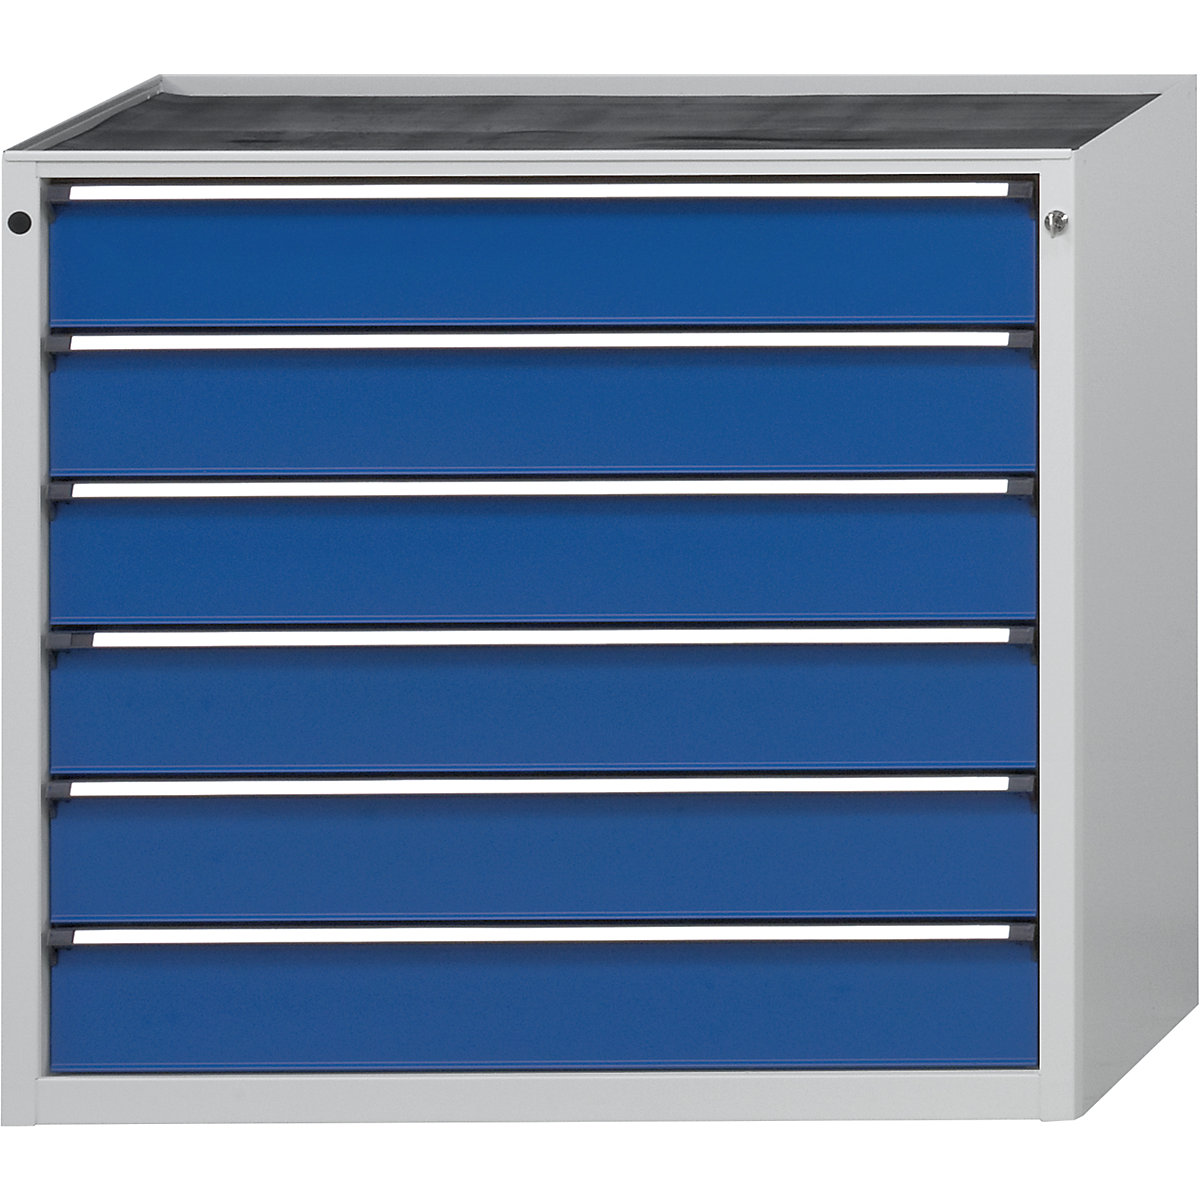 ANKE – Armoire à tiroirs, l x p 1060 x 675 mm, 6 tiroirs, hauteur 980 mm, façade bleu gentiane